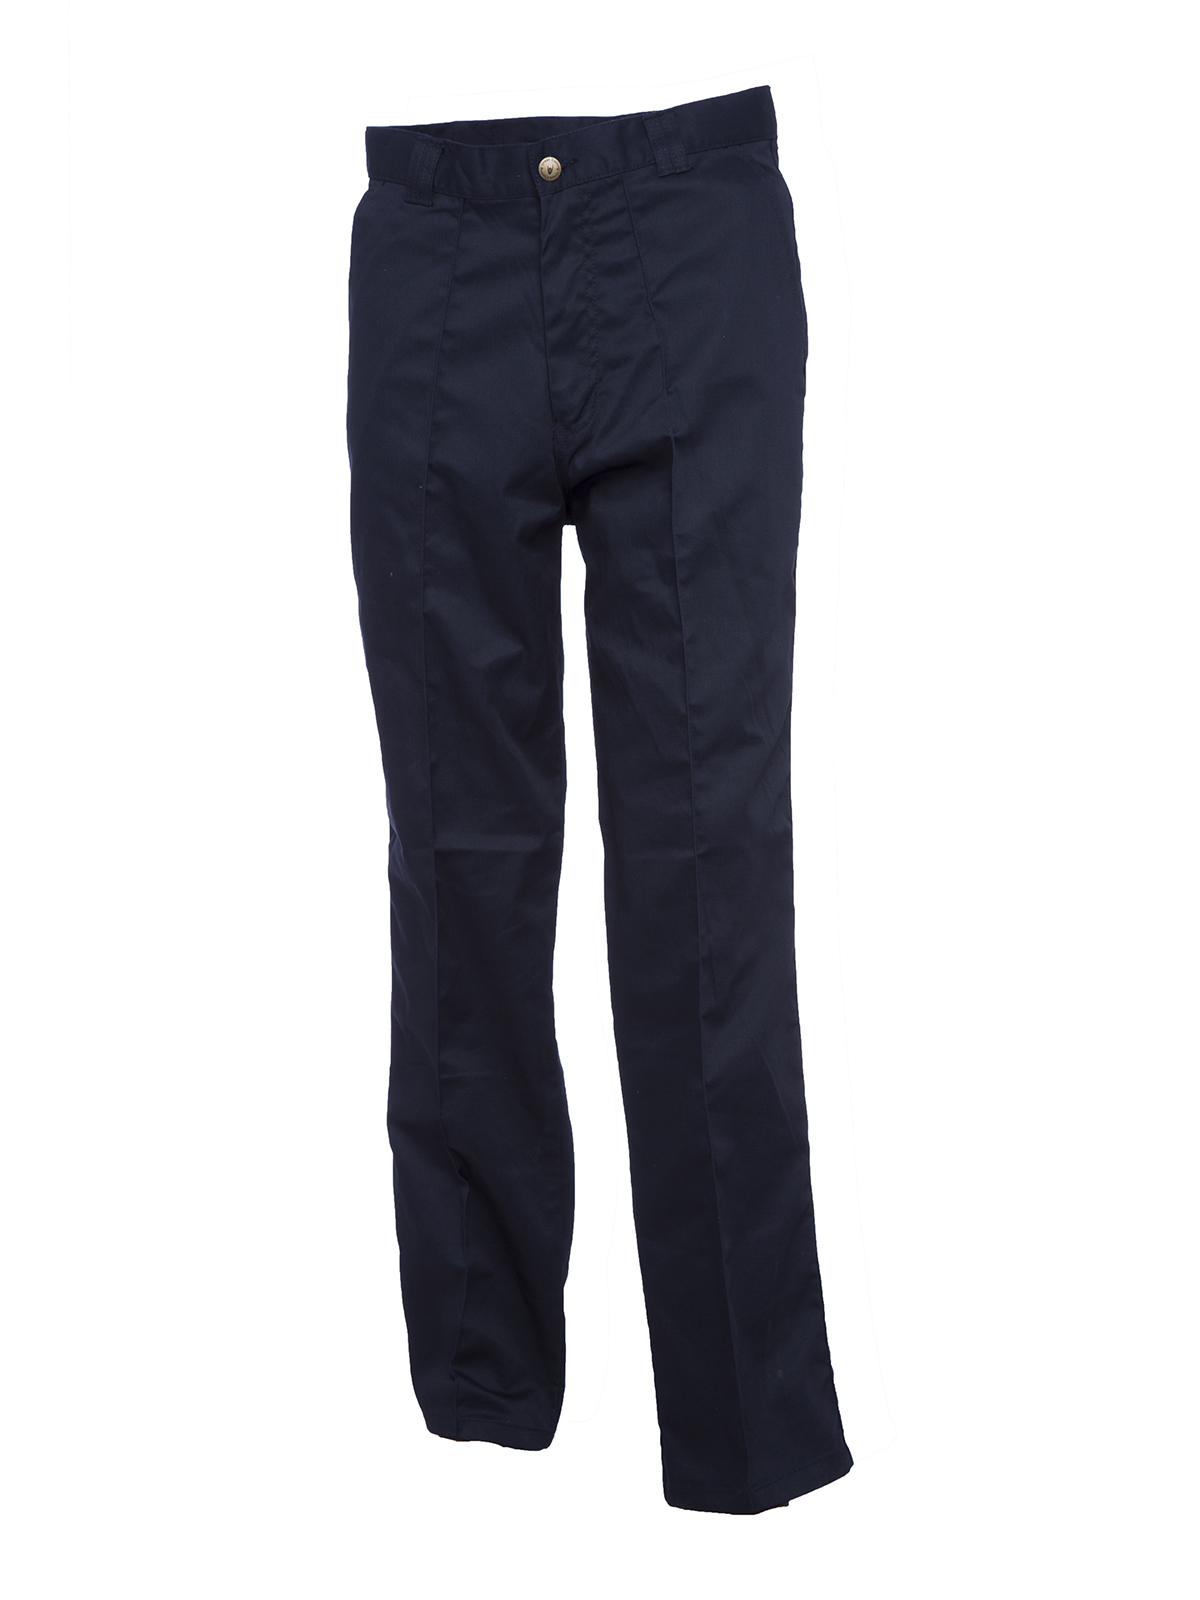 Workwear Trousers, Navy Blue - 40L